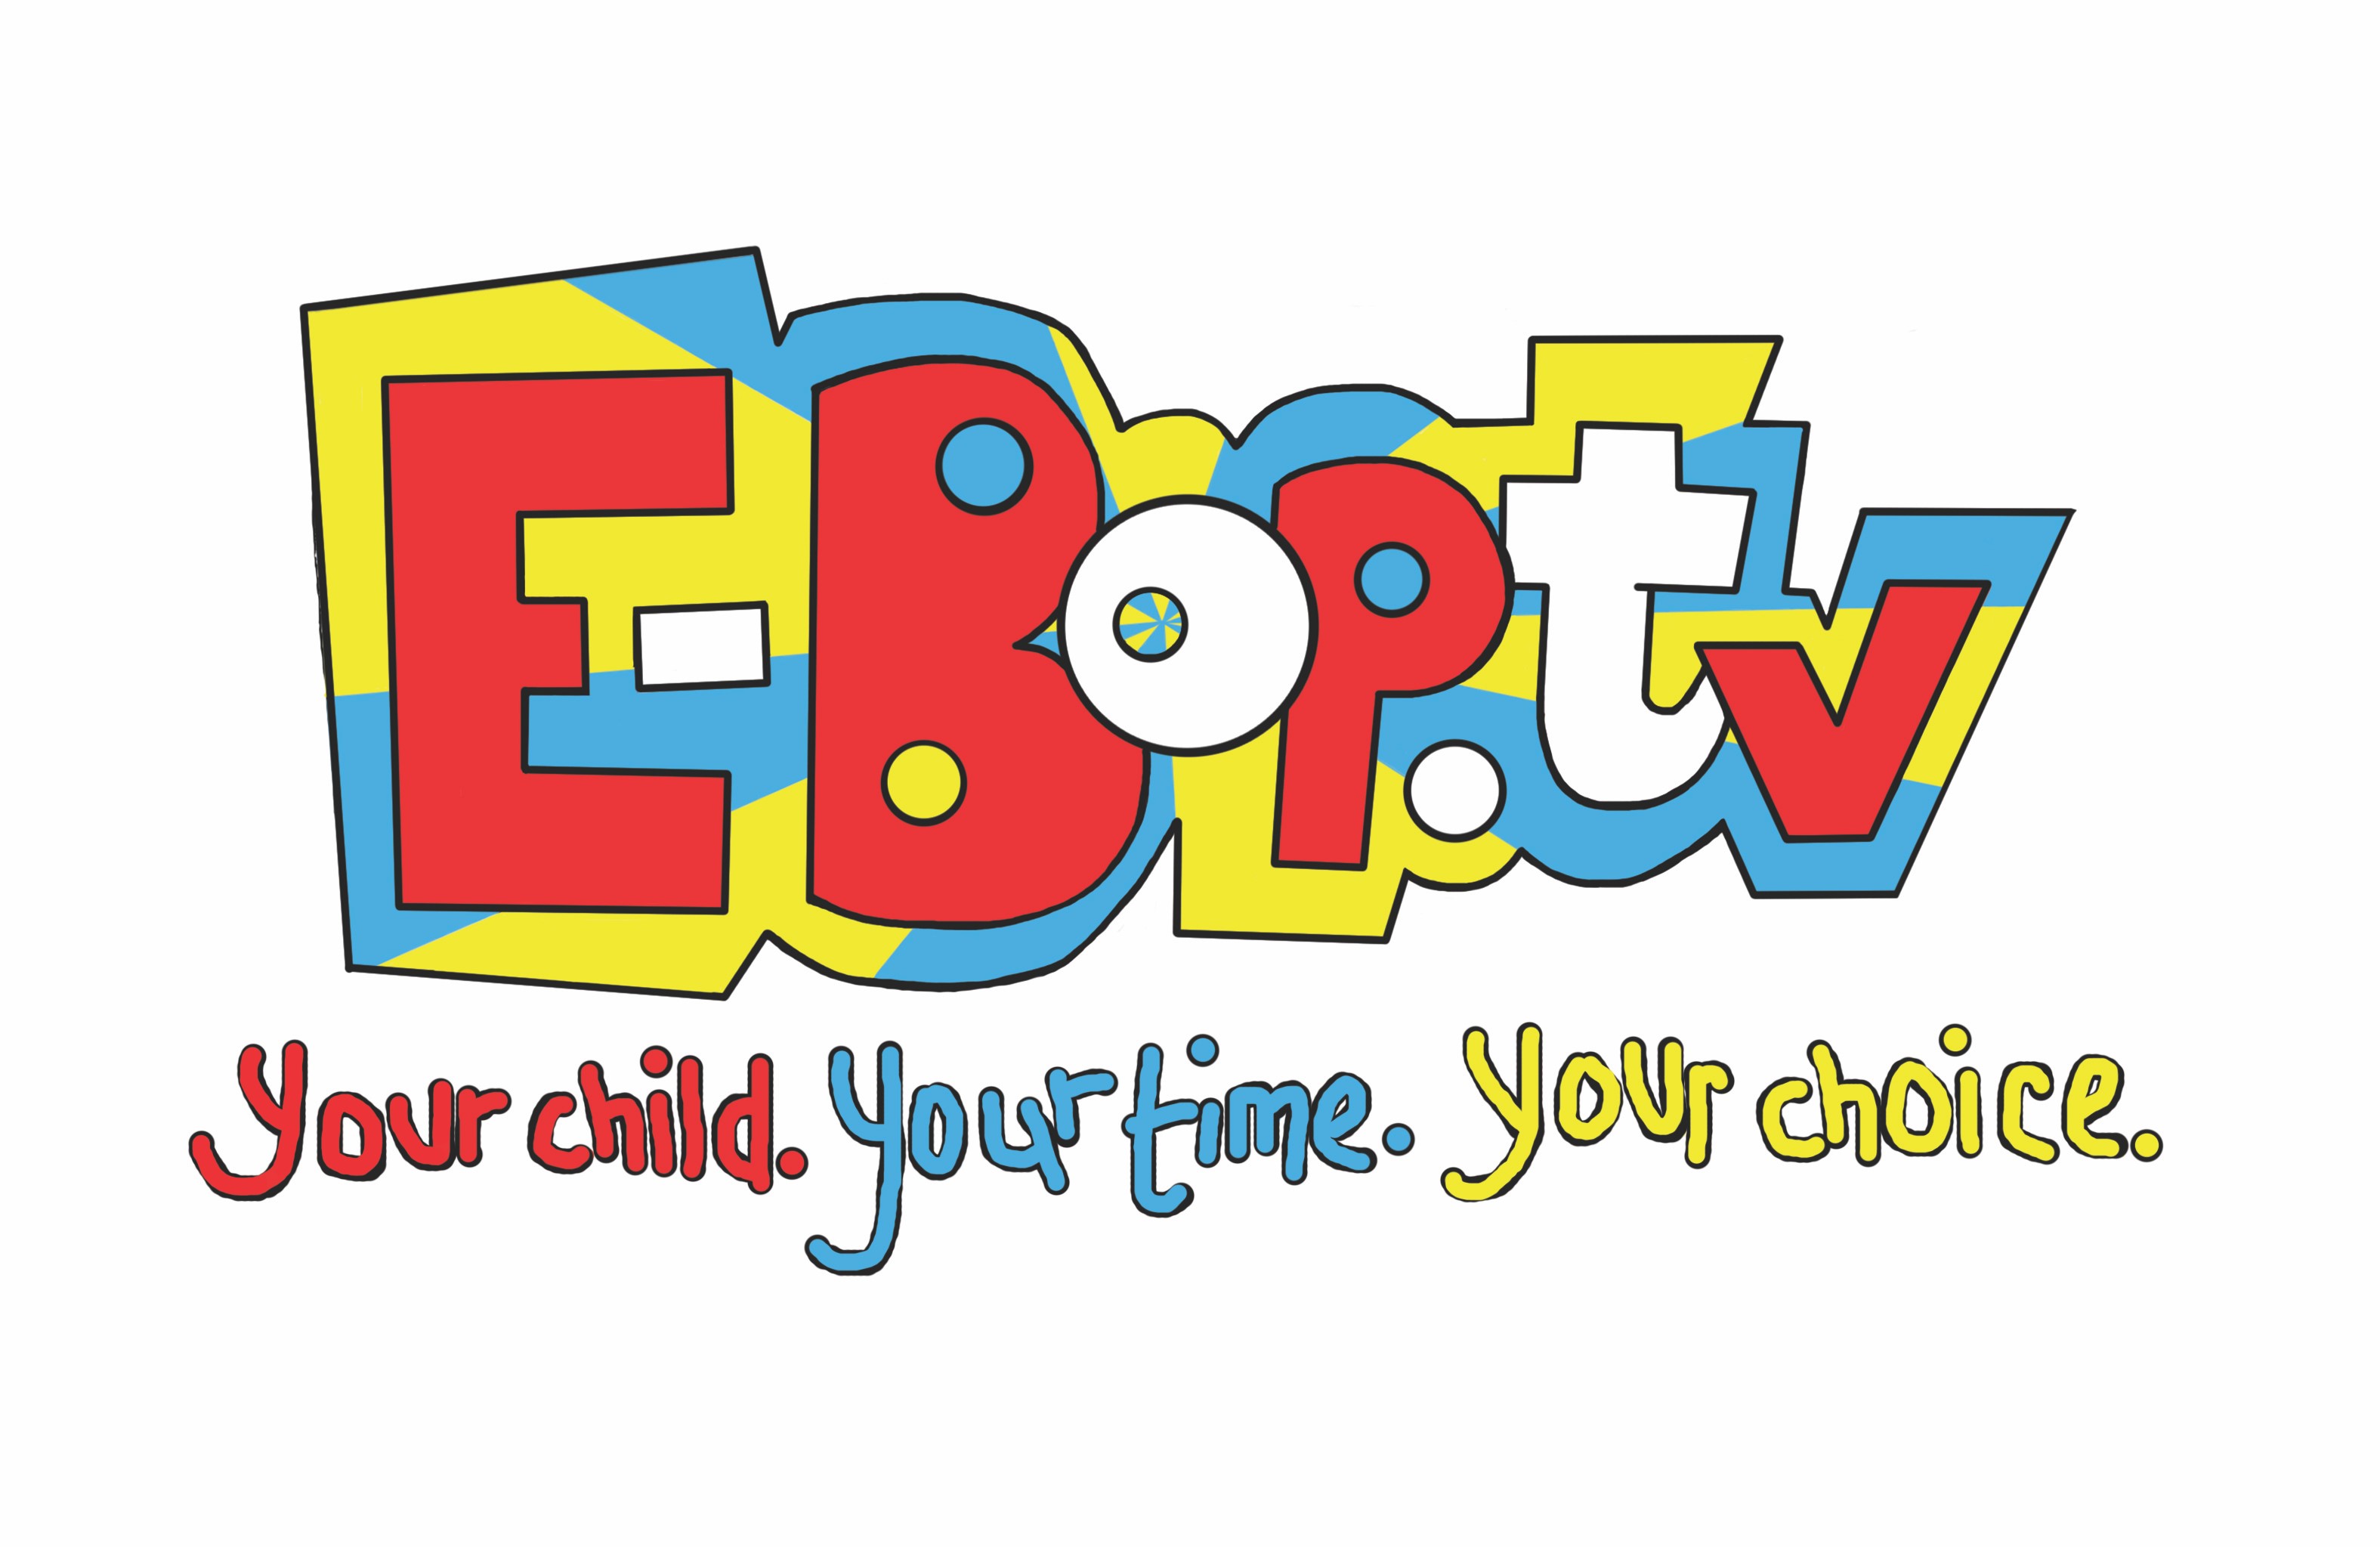 E-Boptv logo